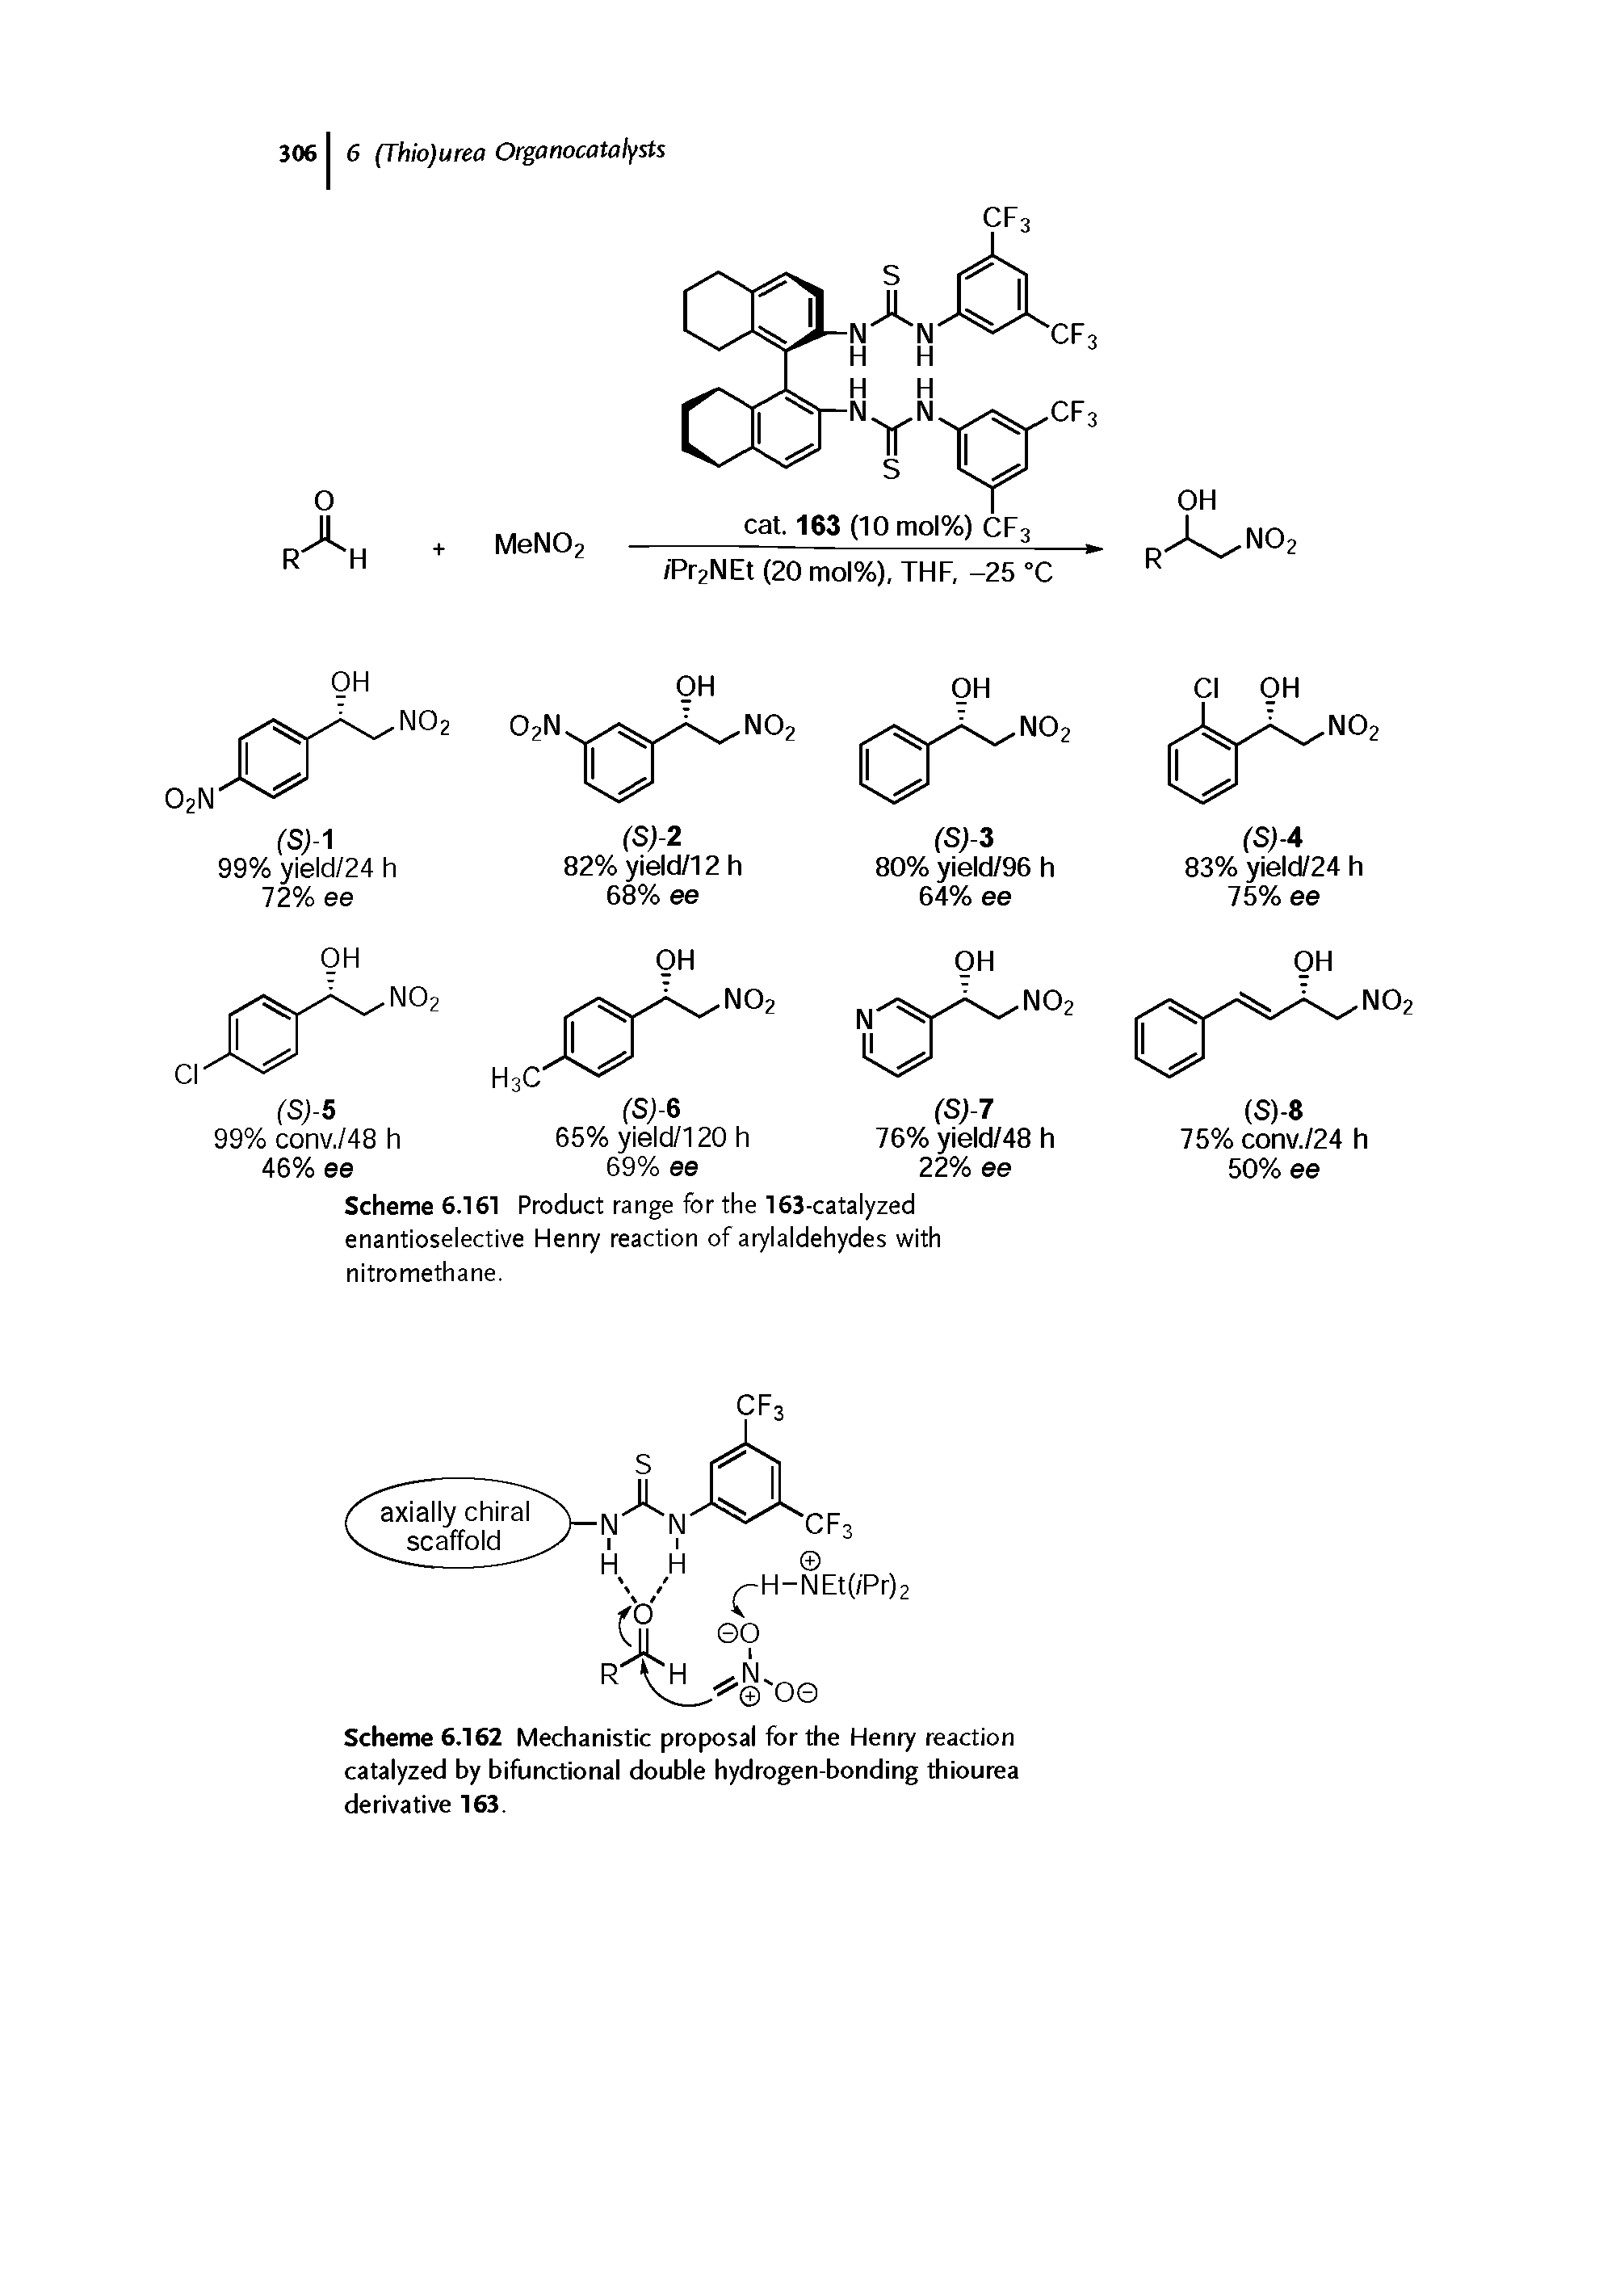 Scheme 6.162 Mechanistic proposal for the Henry reaction catalyzed by bifunctional double hydrogen-bonding thiourea derivative 163.